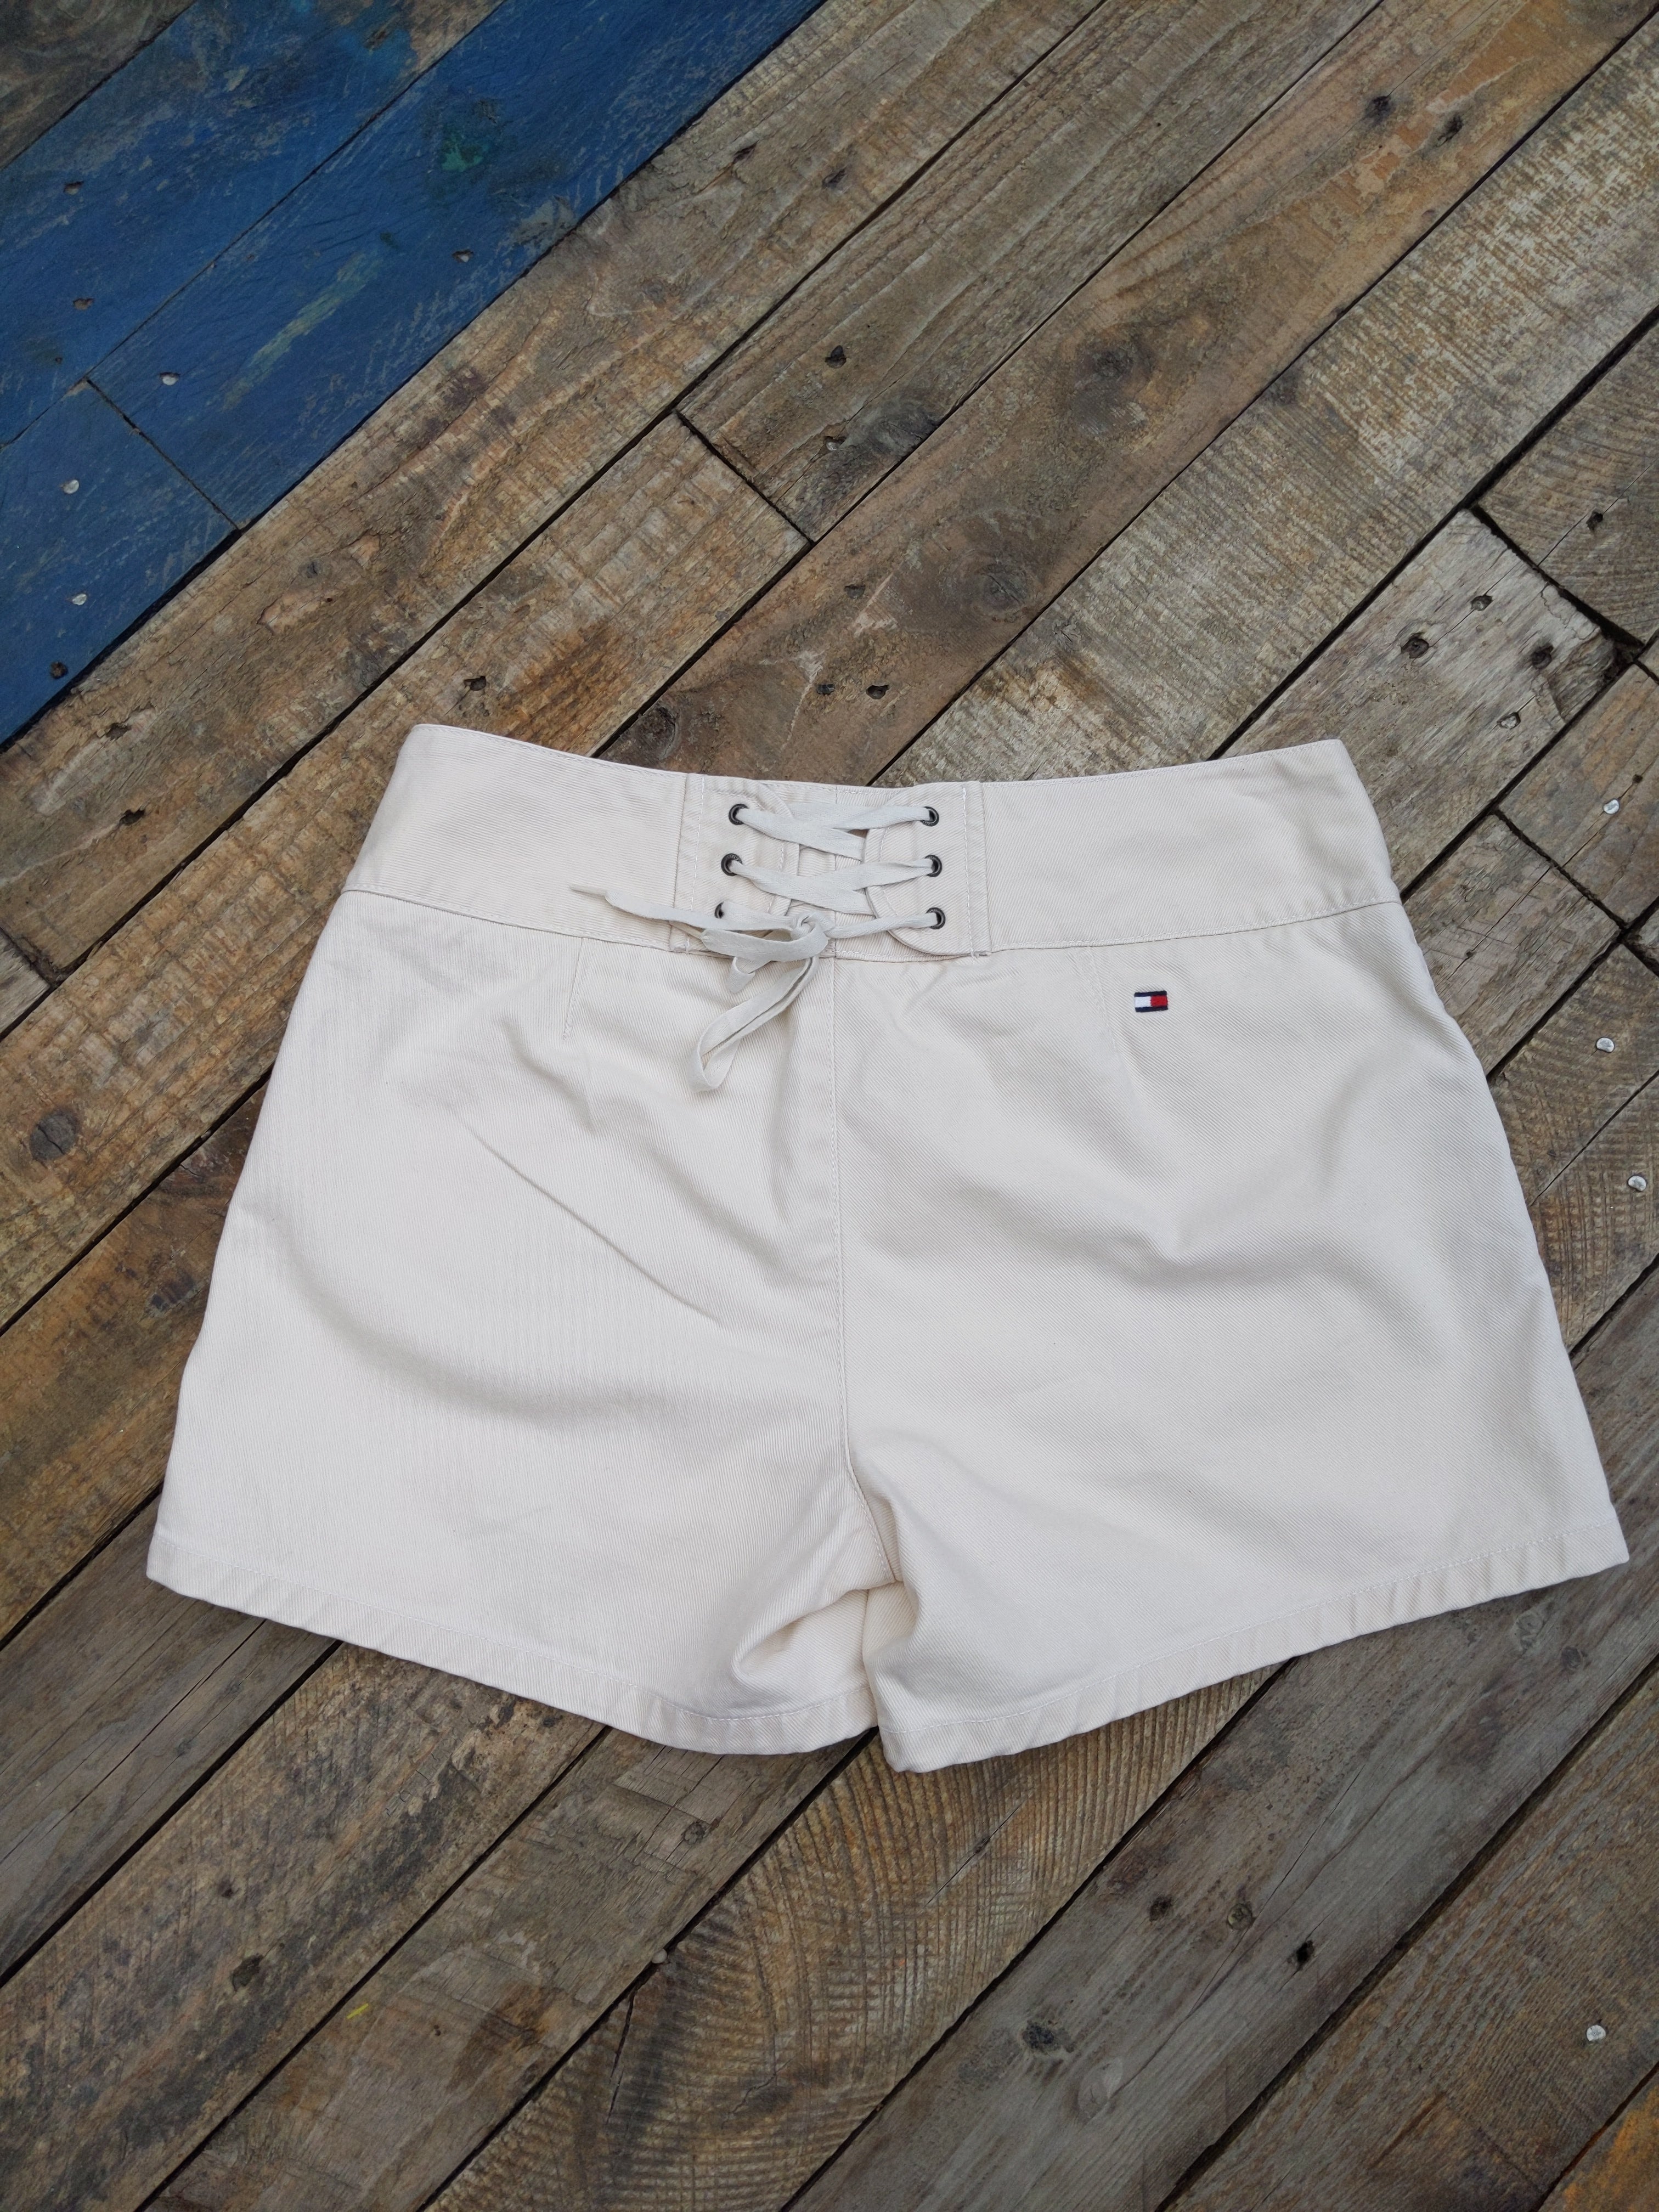 Vintage Tommy Hilfiger shorts, waist 30"